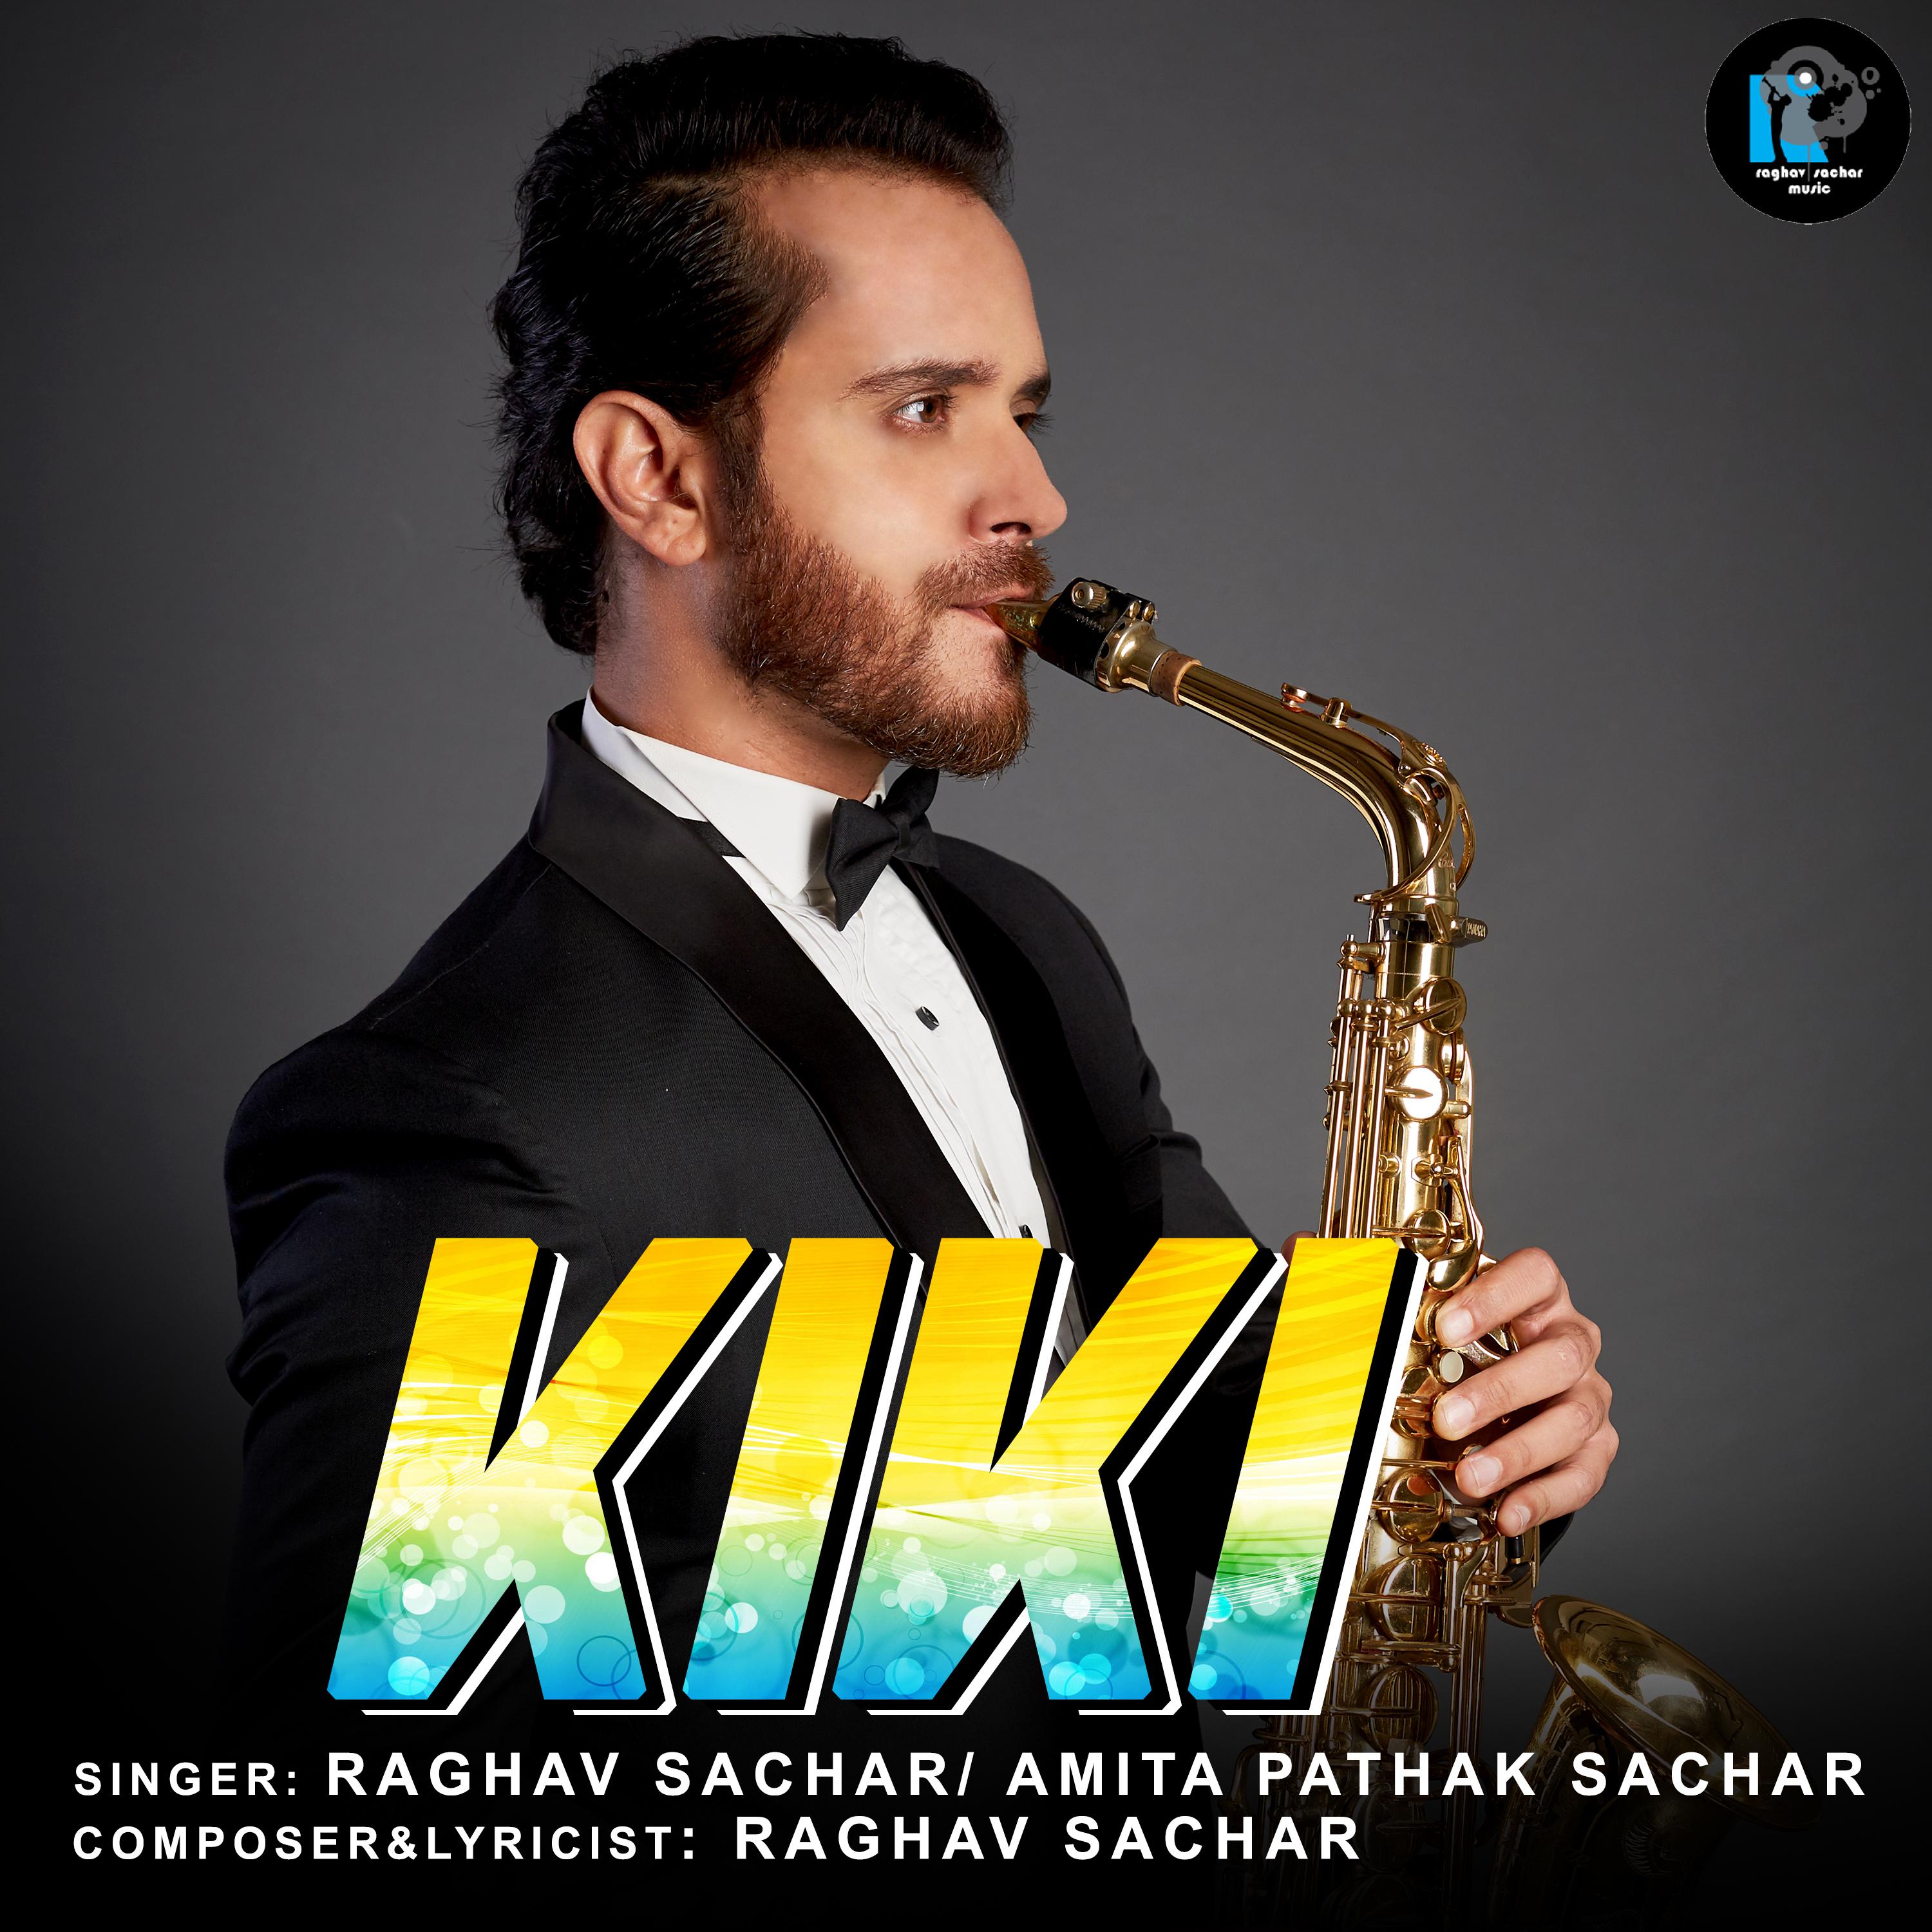 raghav sachar saxophone new albums